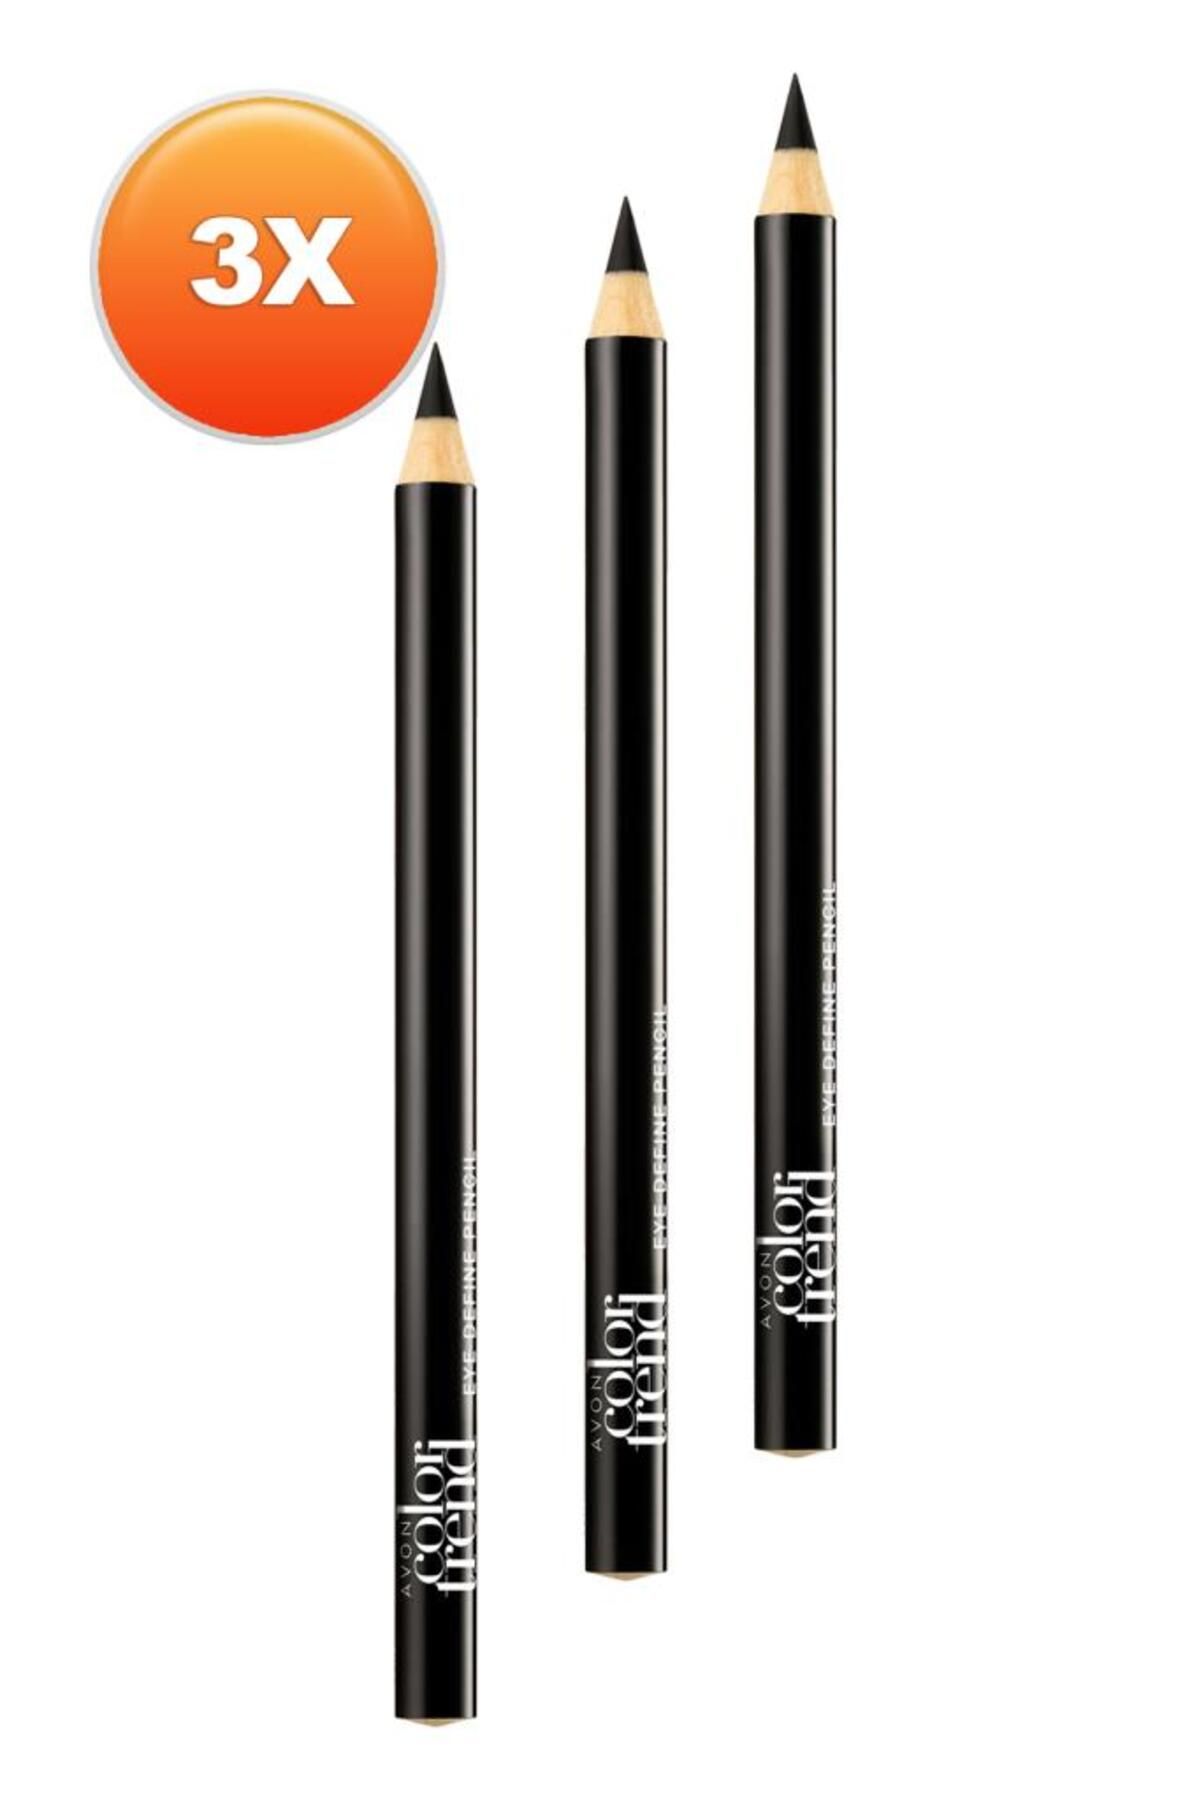 Avon Color Trend Siyah Göz Kalemi Üçlü Set